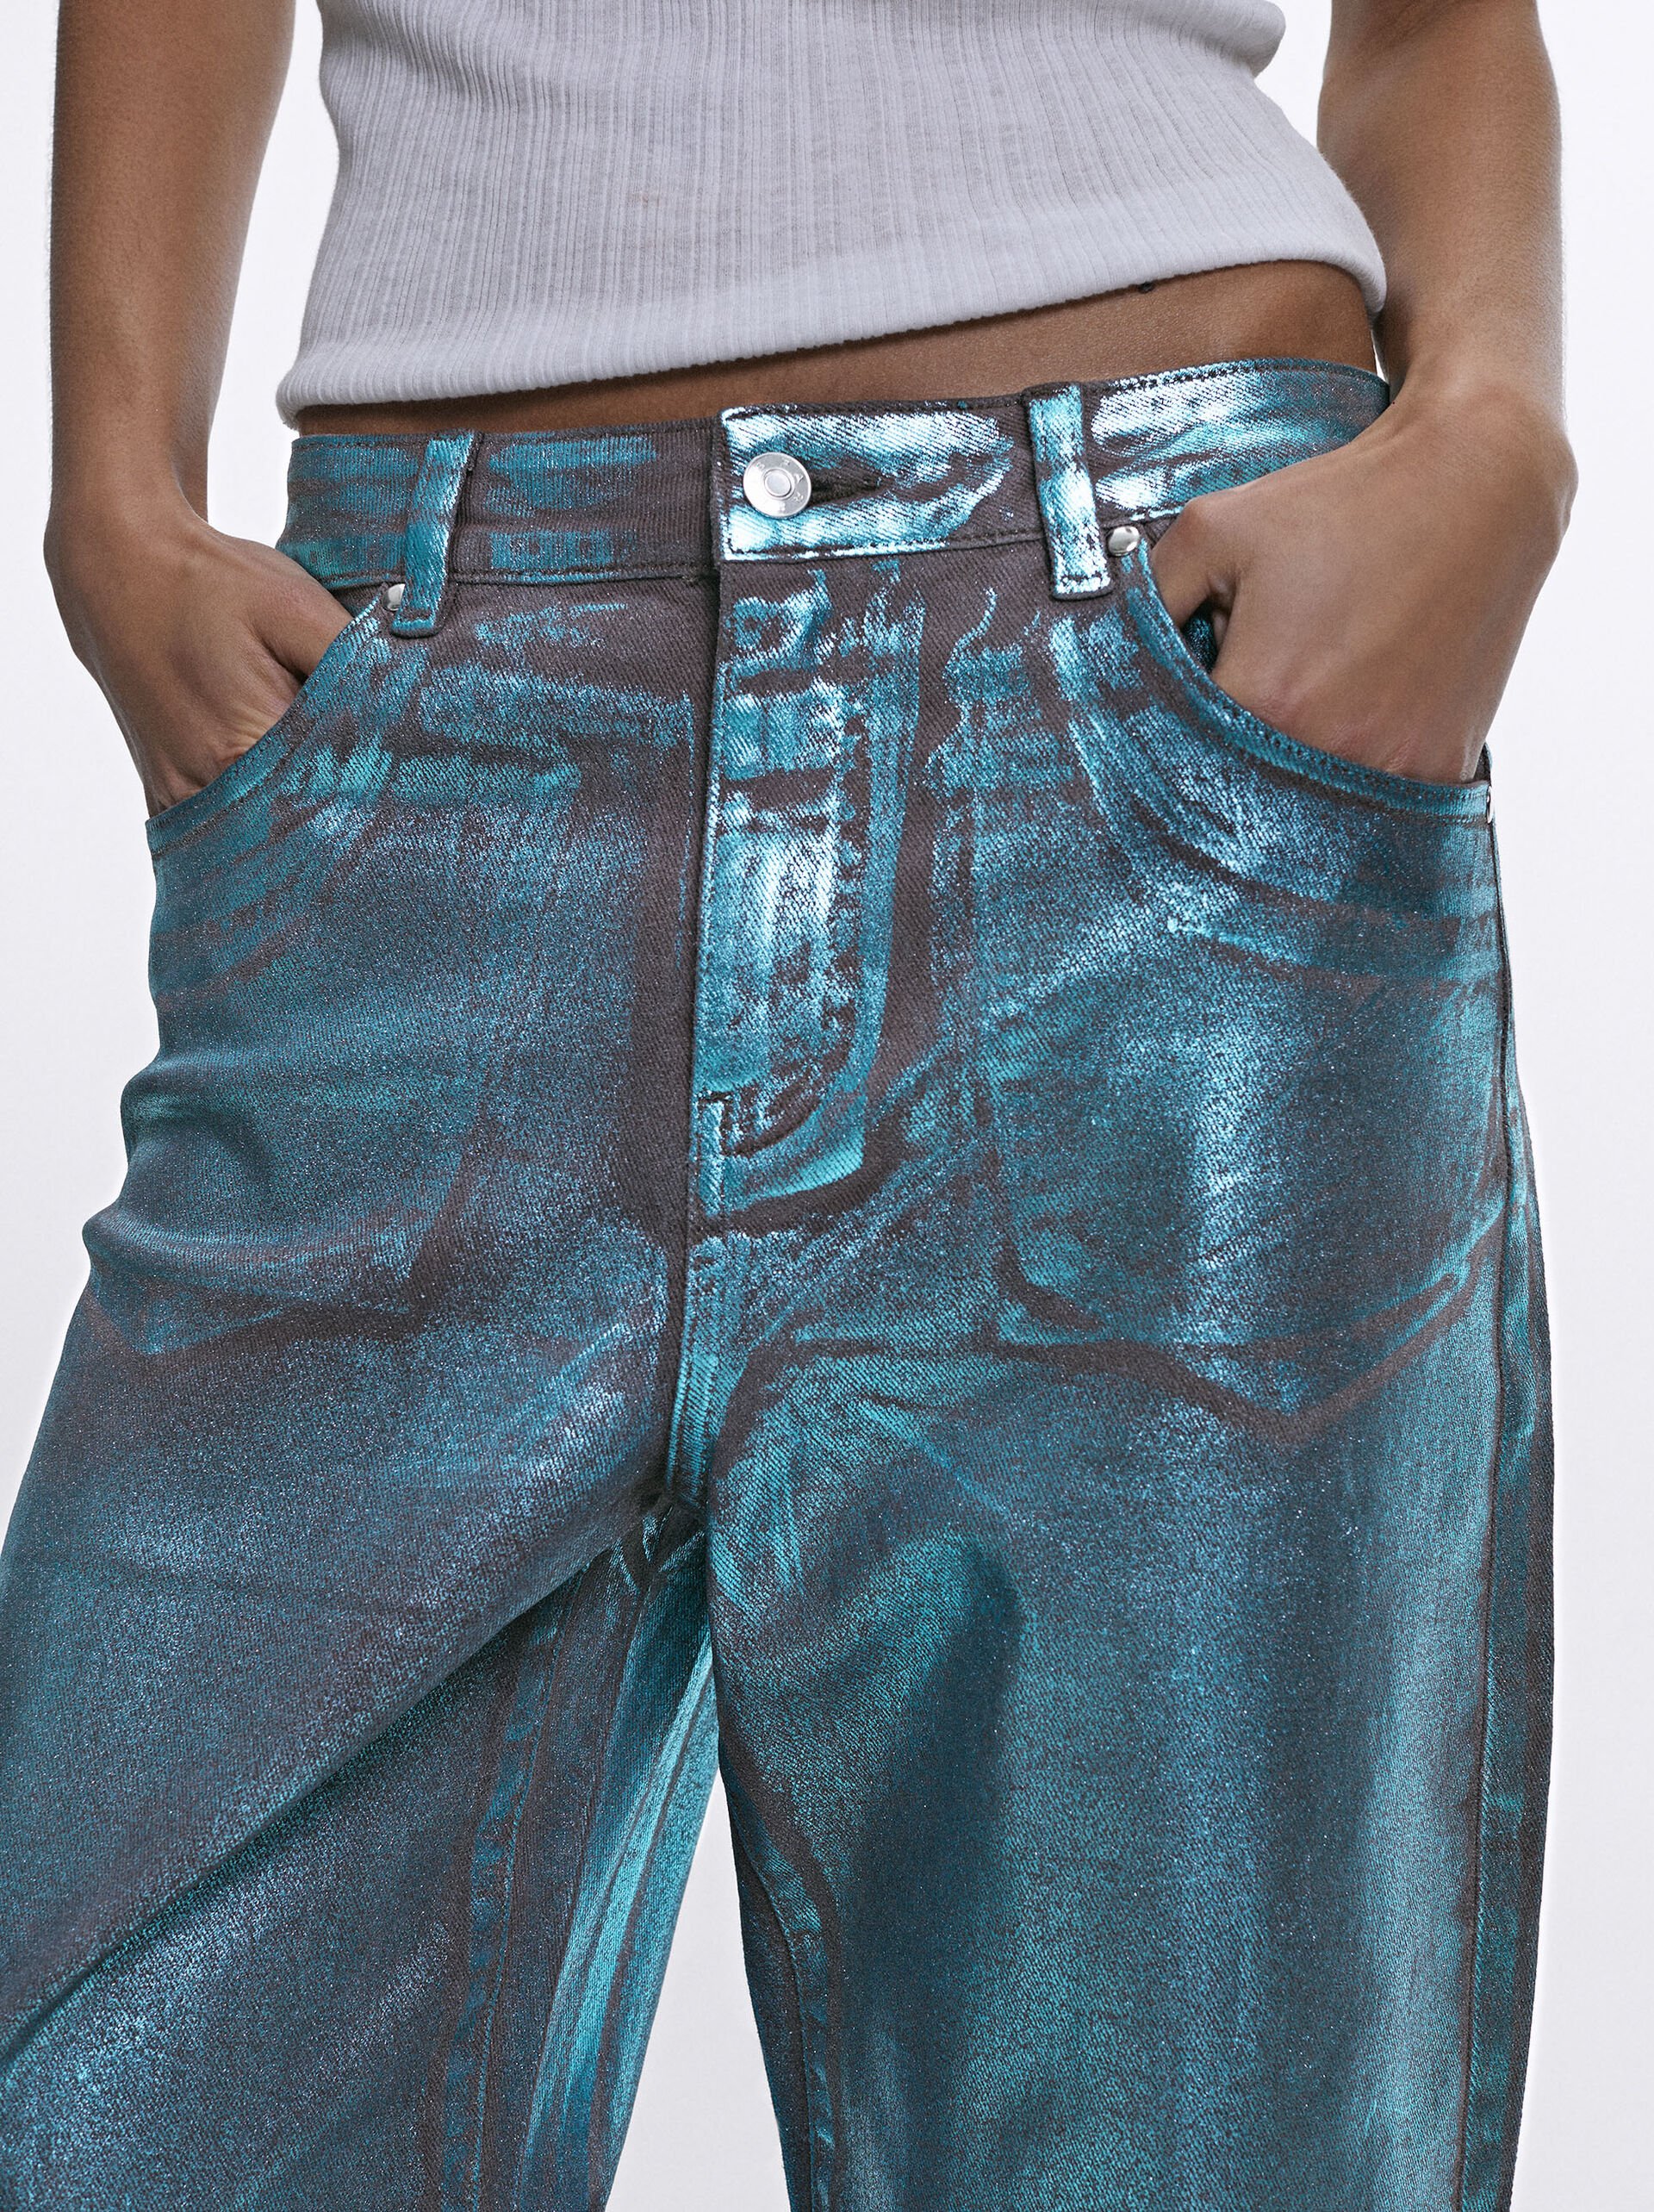 Jeans In Metallic-Optik image number 4.0